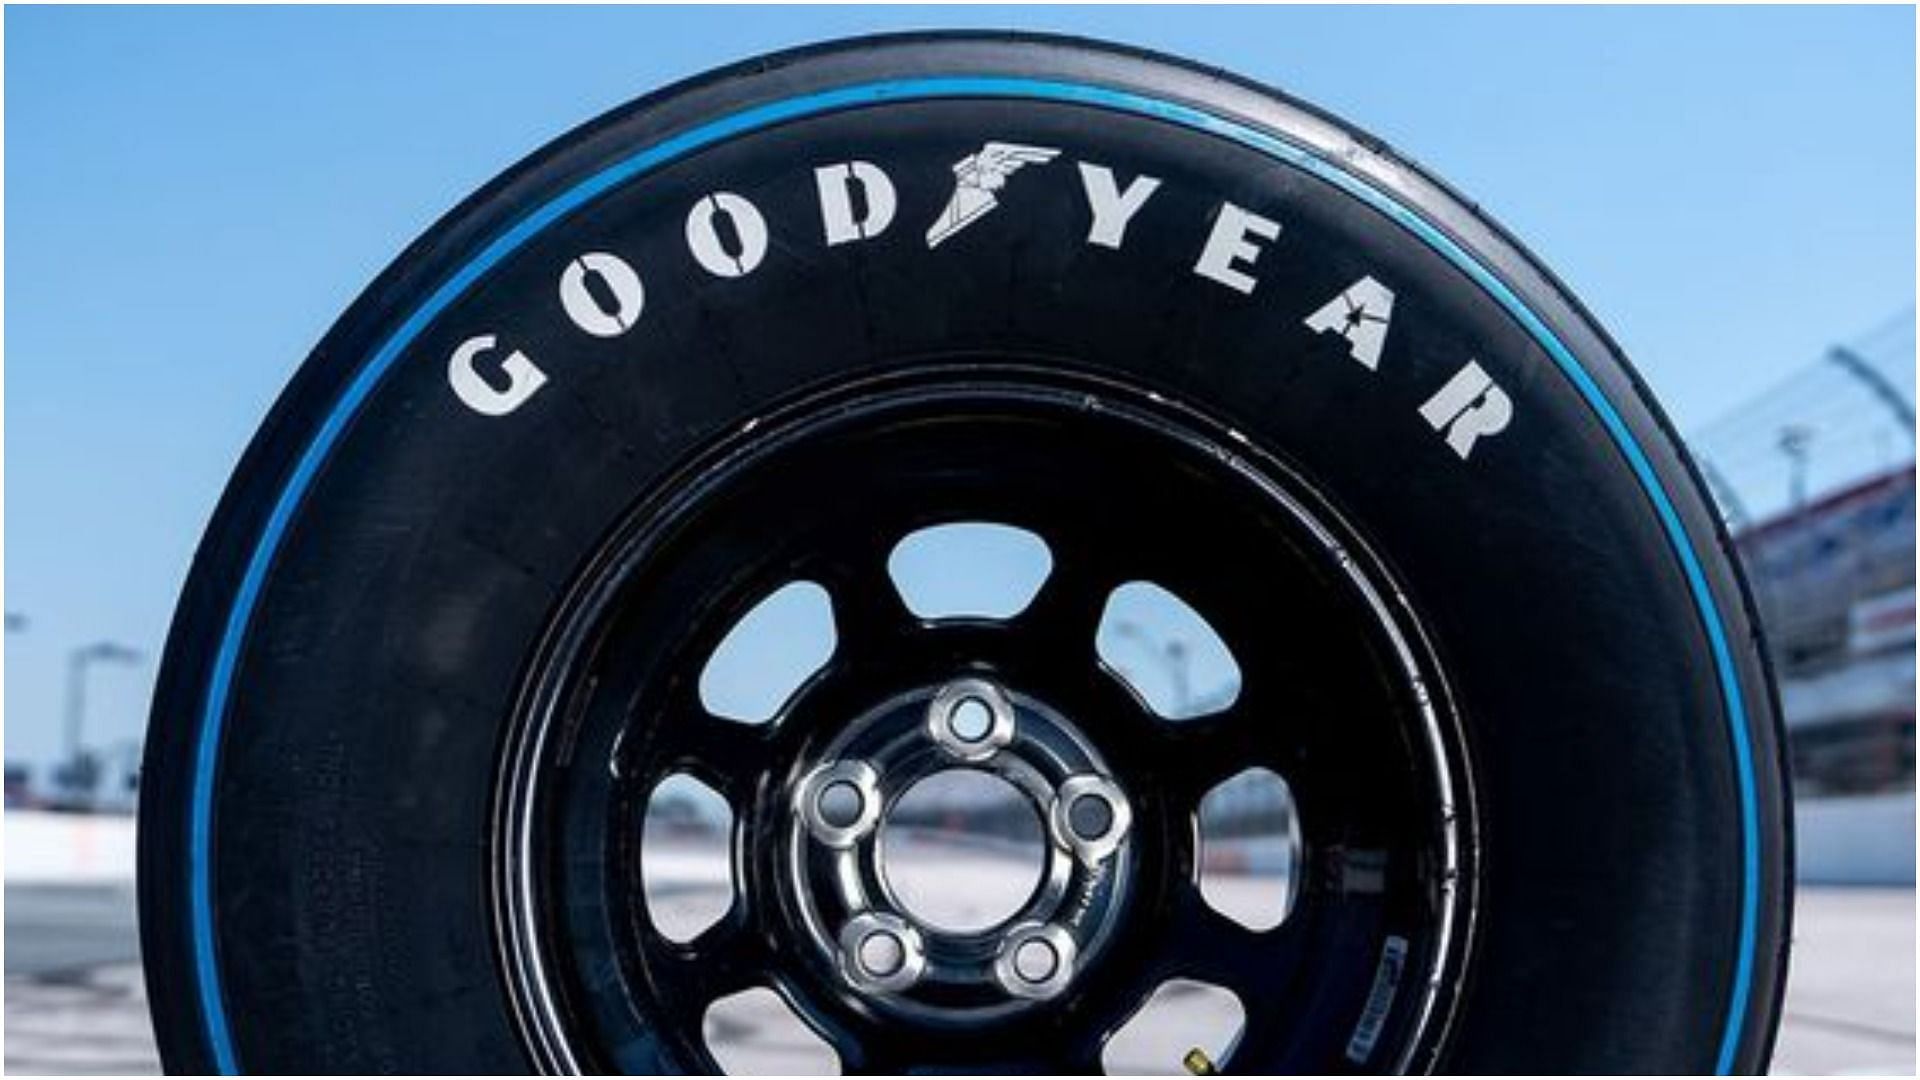 Goodyear recall 2022: Tire size revealed amid car crash fears (Image via @goodyear/Instagram)